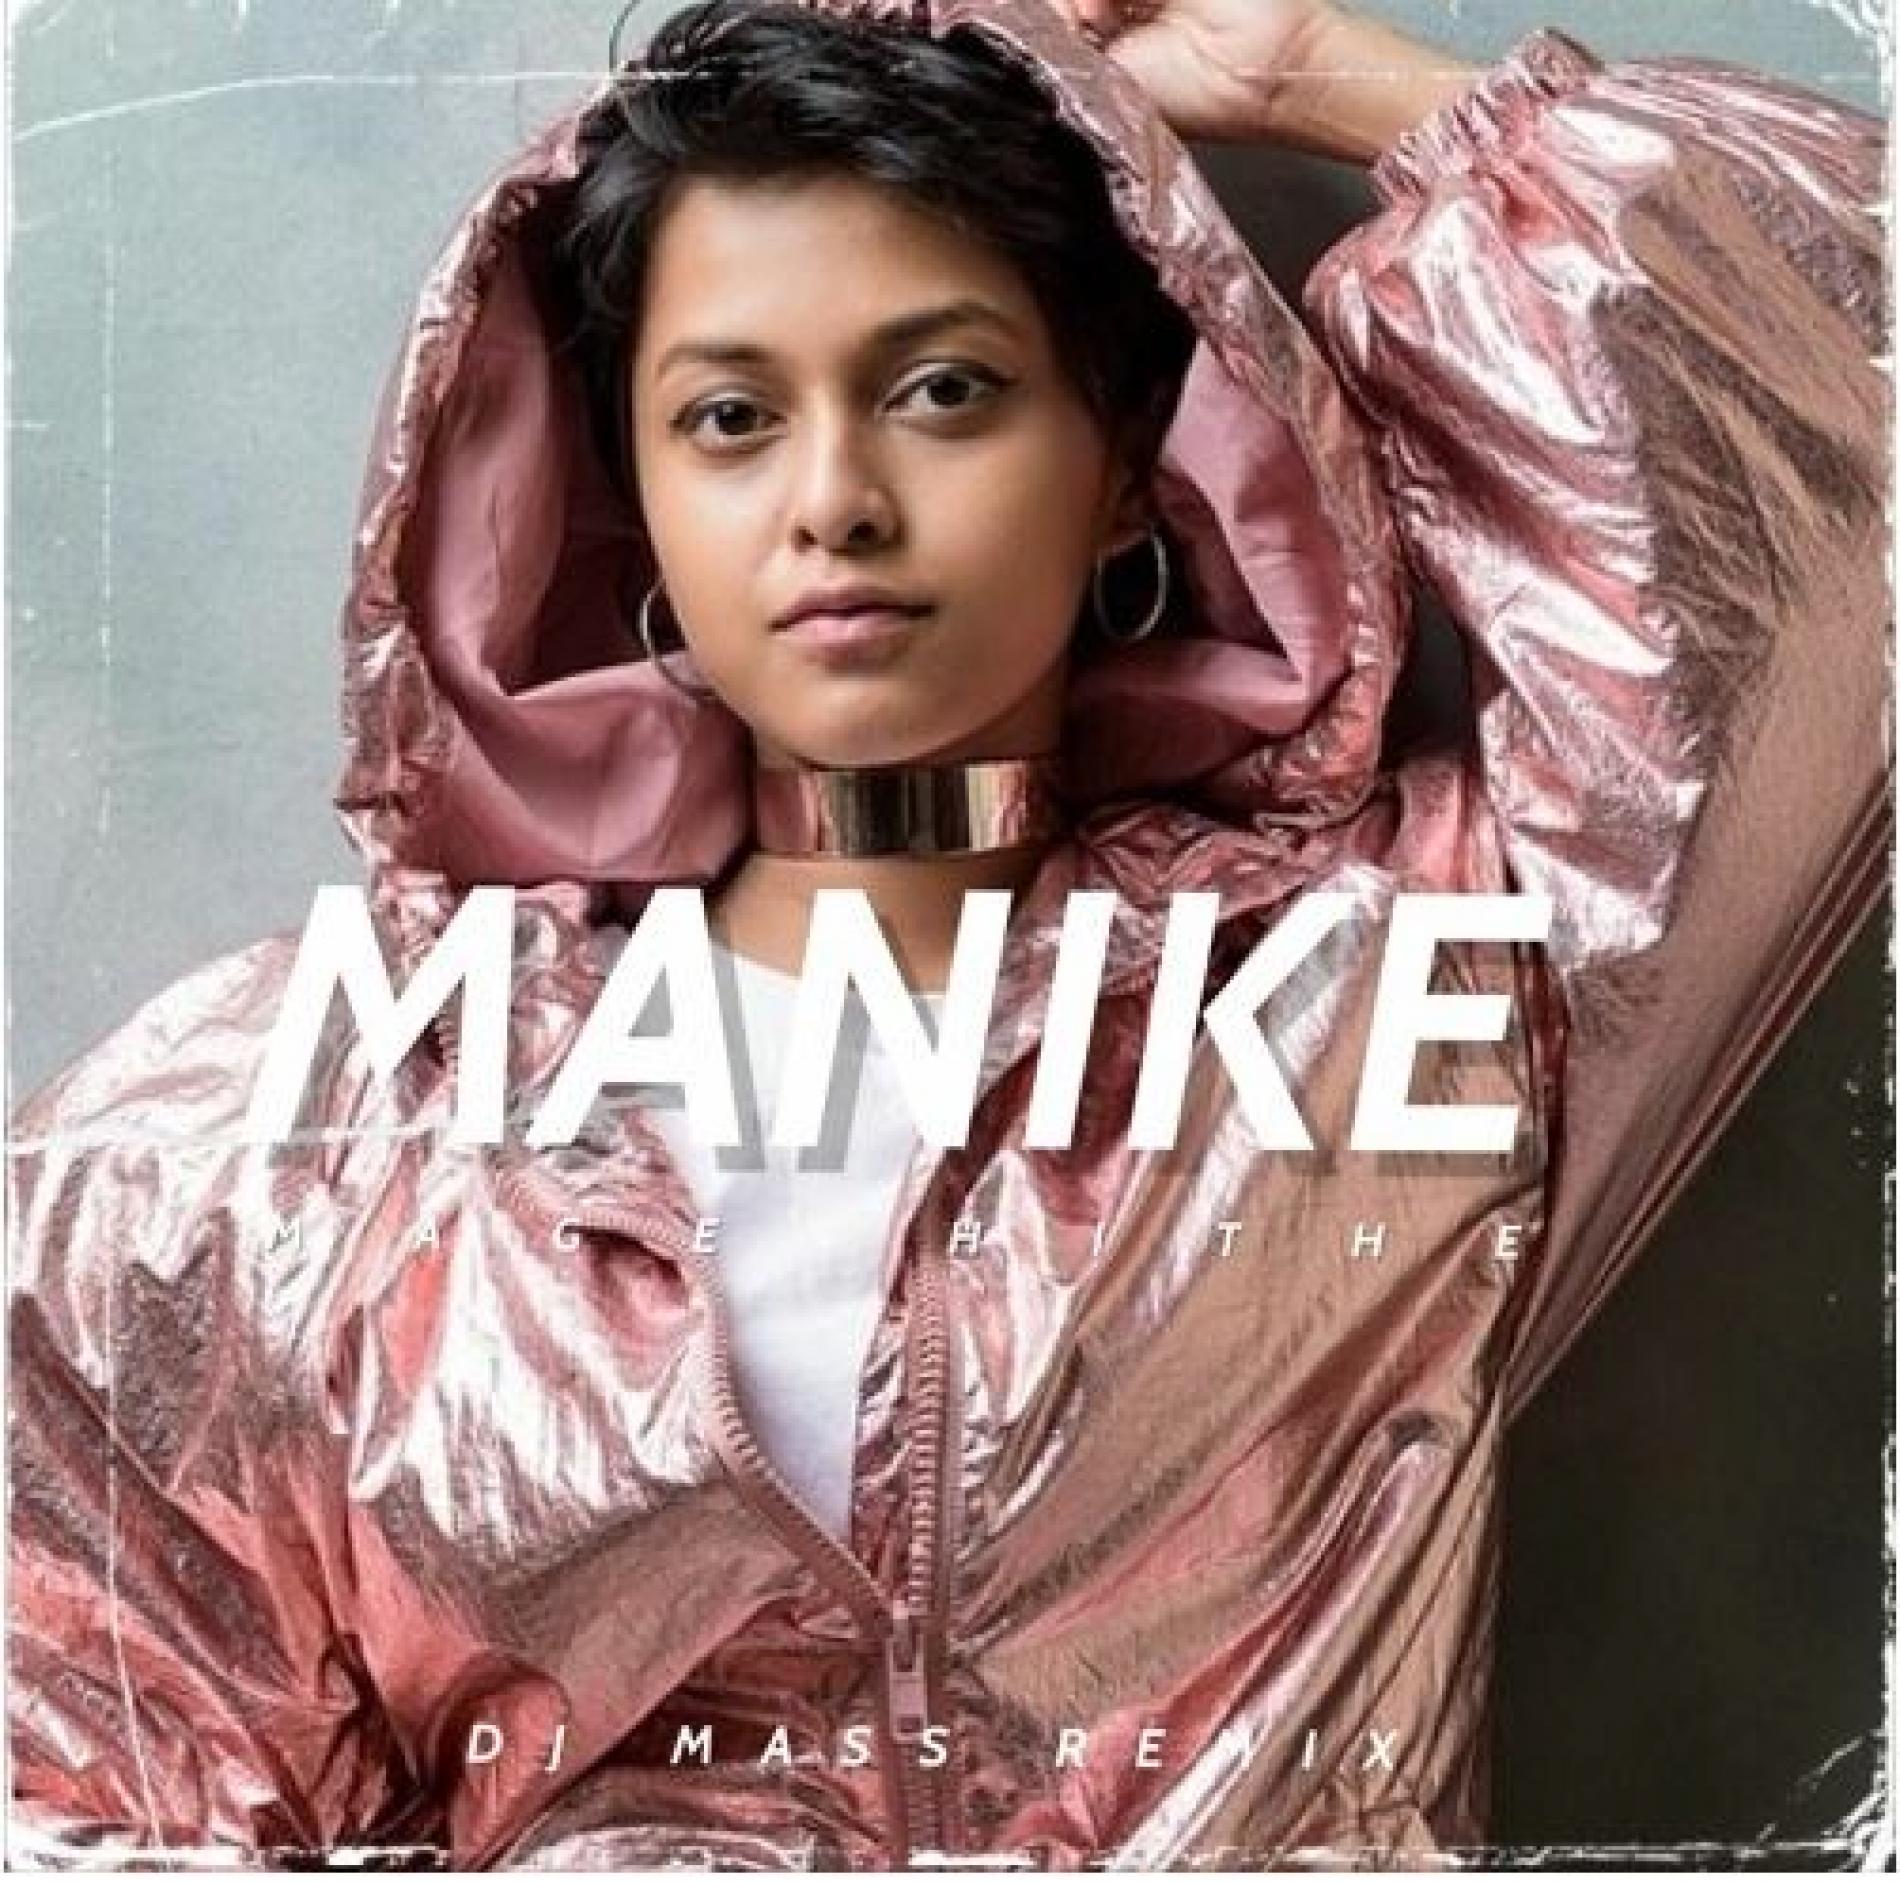 New Music : Manike Mage Hithe – Yohani De Silva (DJ Mass Remix)